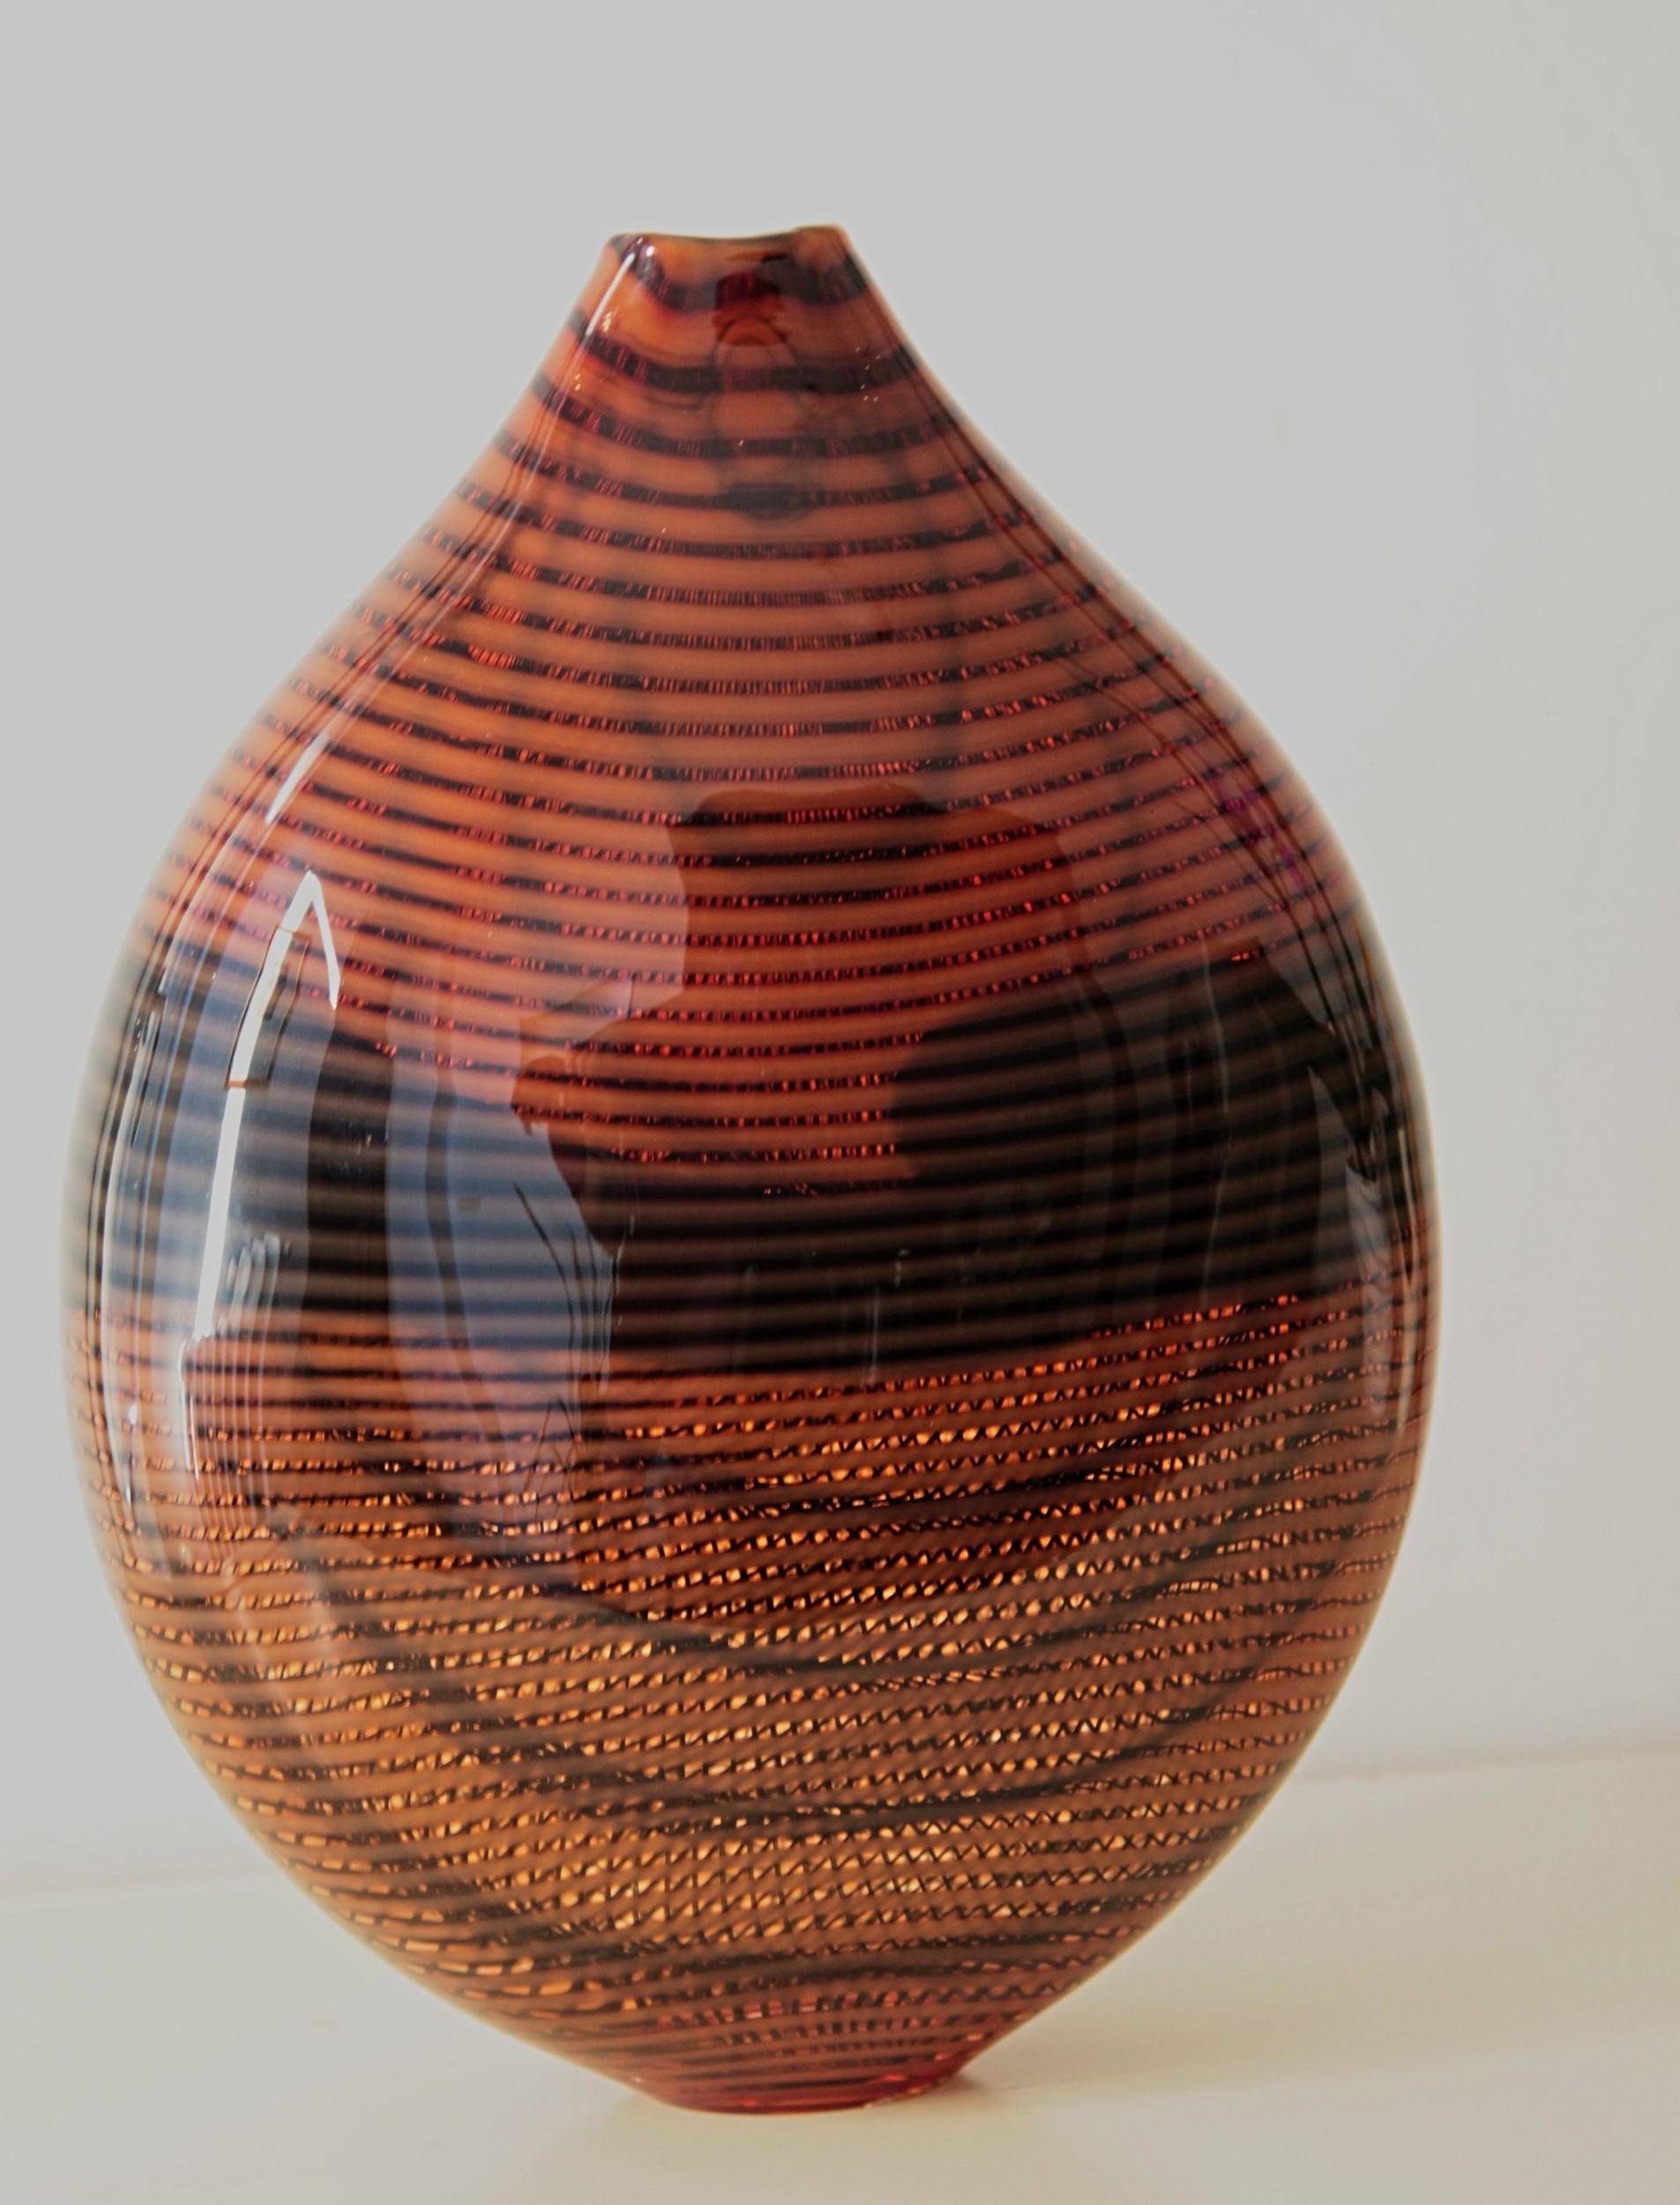 Lino Tagliapietra 2008, Burnt Orange and Black Smalto Vase, Signed 5